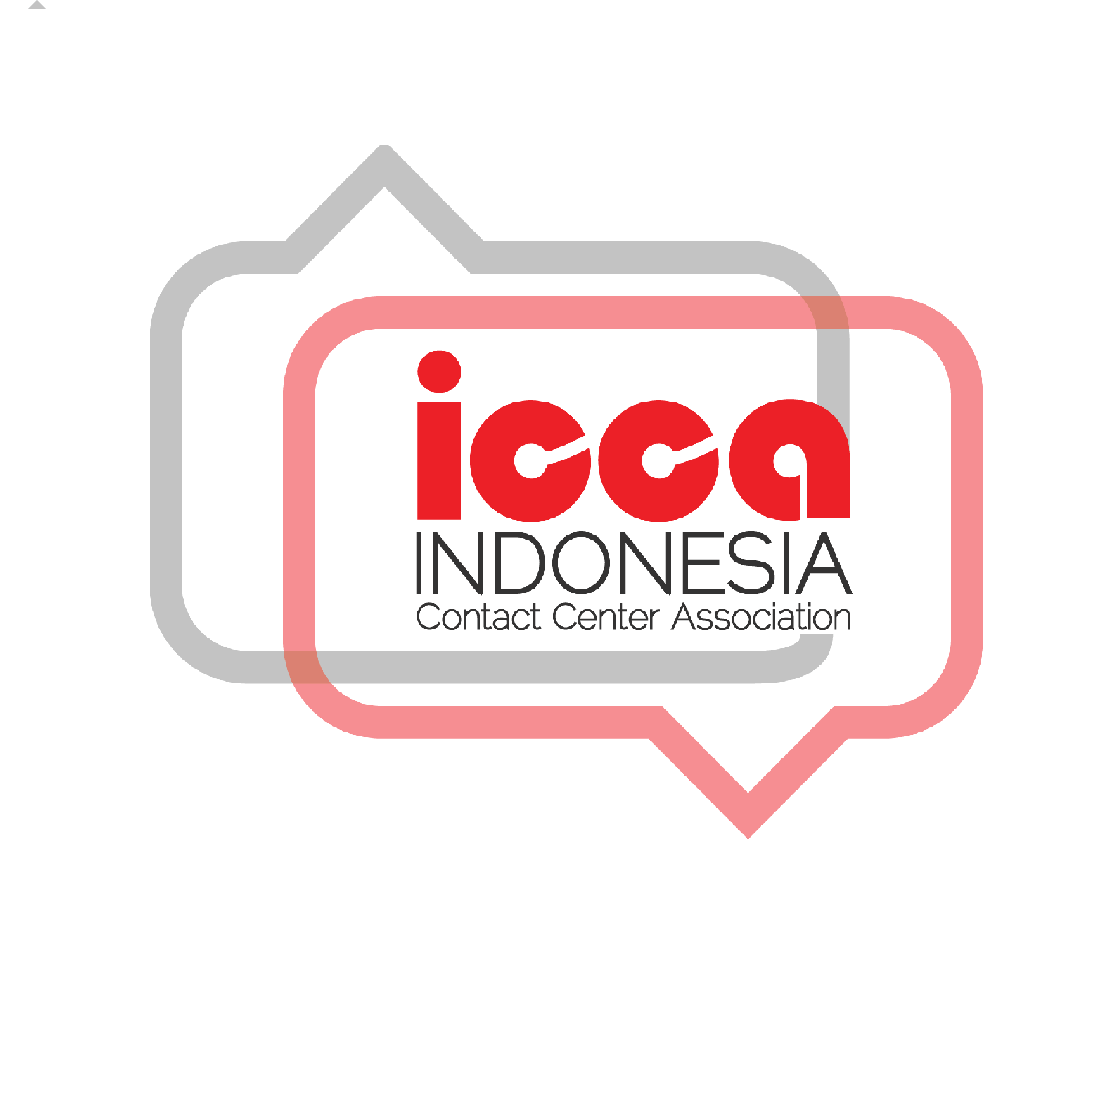 ICCA : Indonesia Contact Center Association, member of CC-APAC (Contact Center Association Asia Pacific)